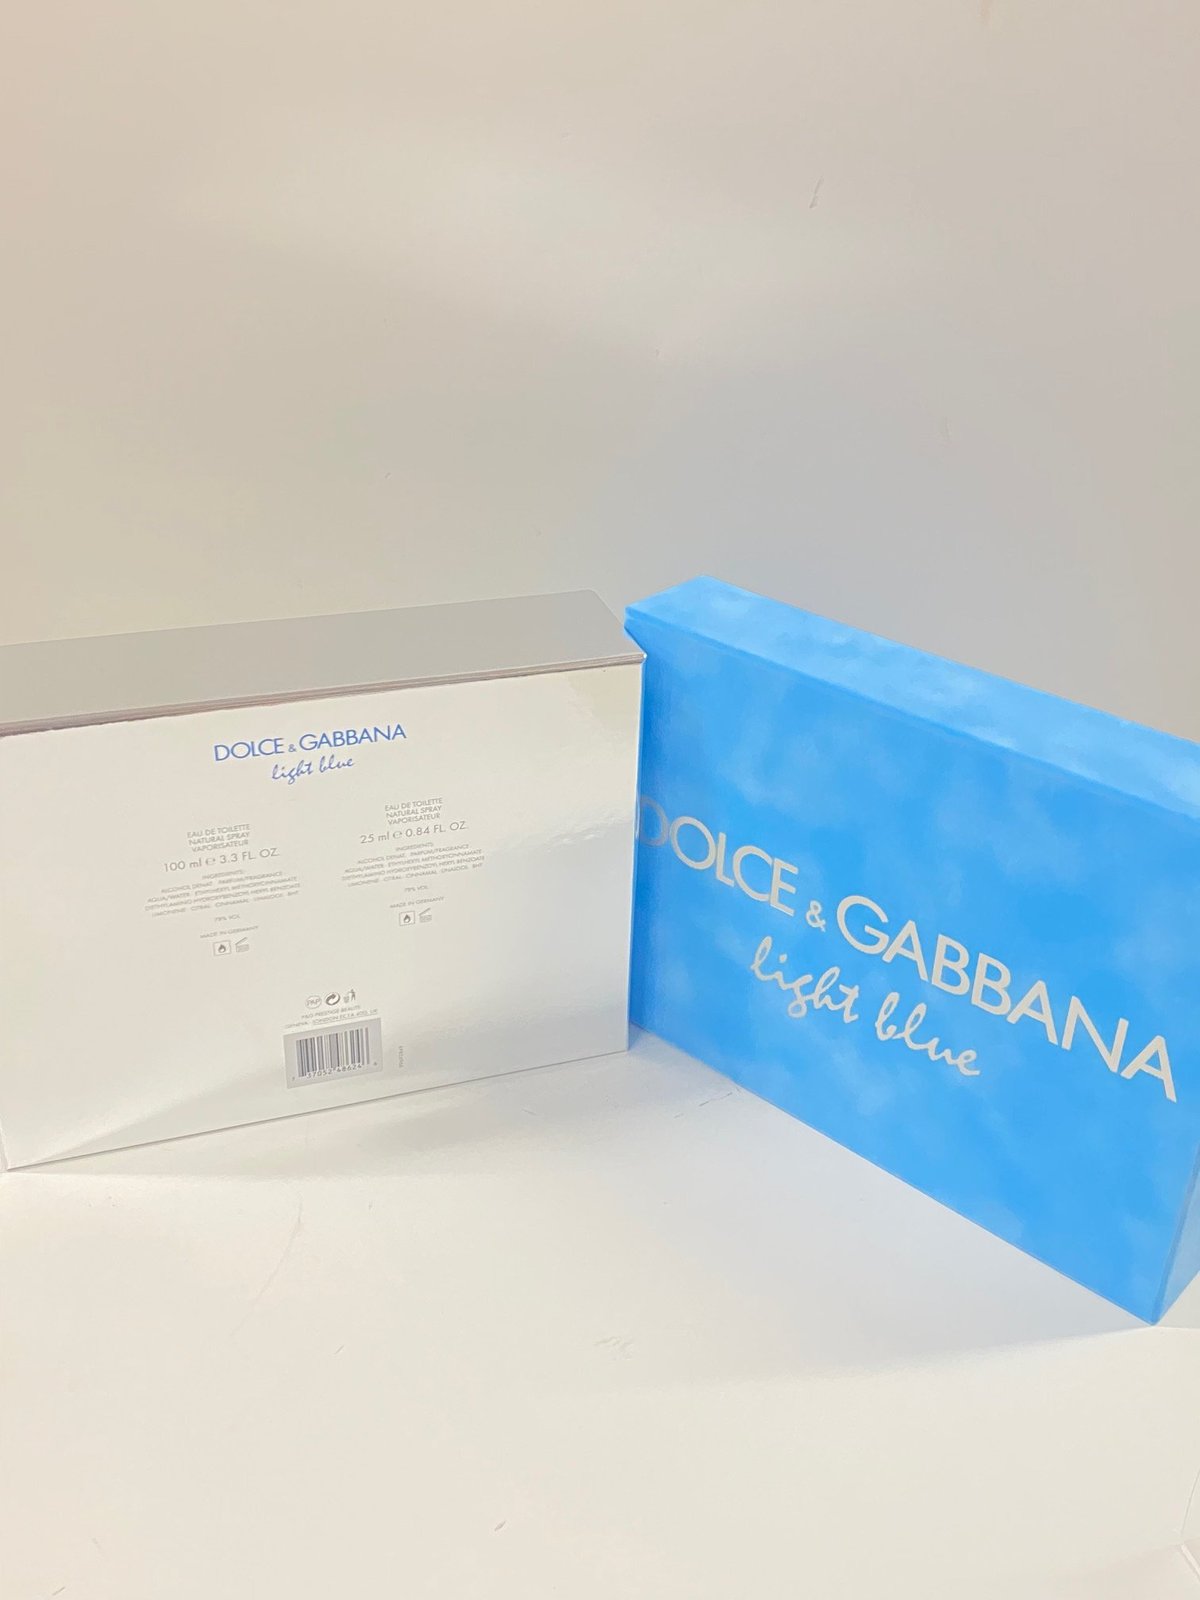 Light Blue by Dolce & Gabbana Eau de Toilette Spray 6.7 oz